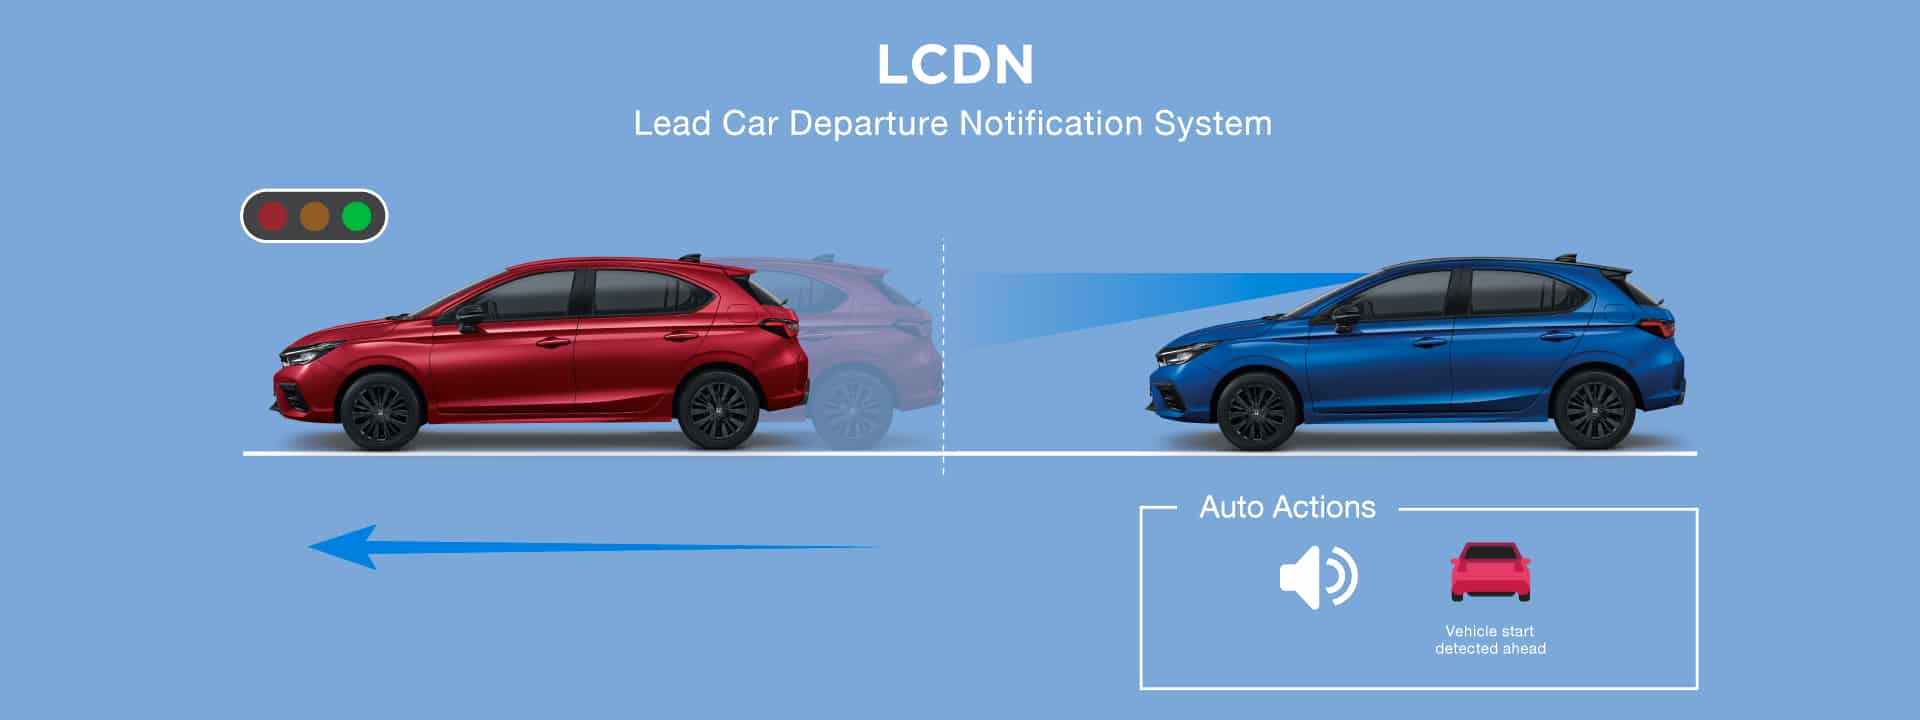 LCDN ระบบเตือนเมื่อรถคันหน้าเคลื่อนที่